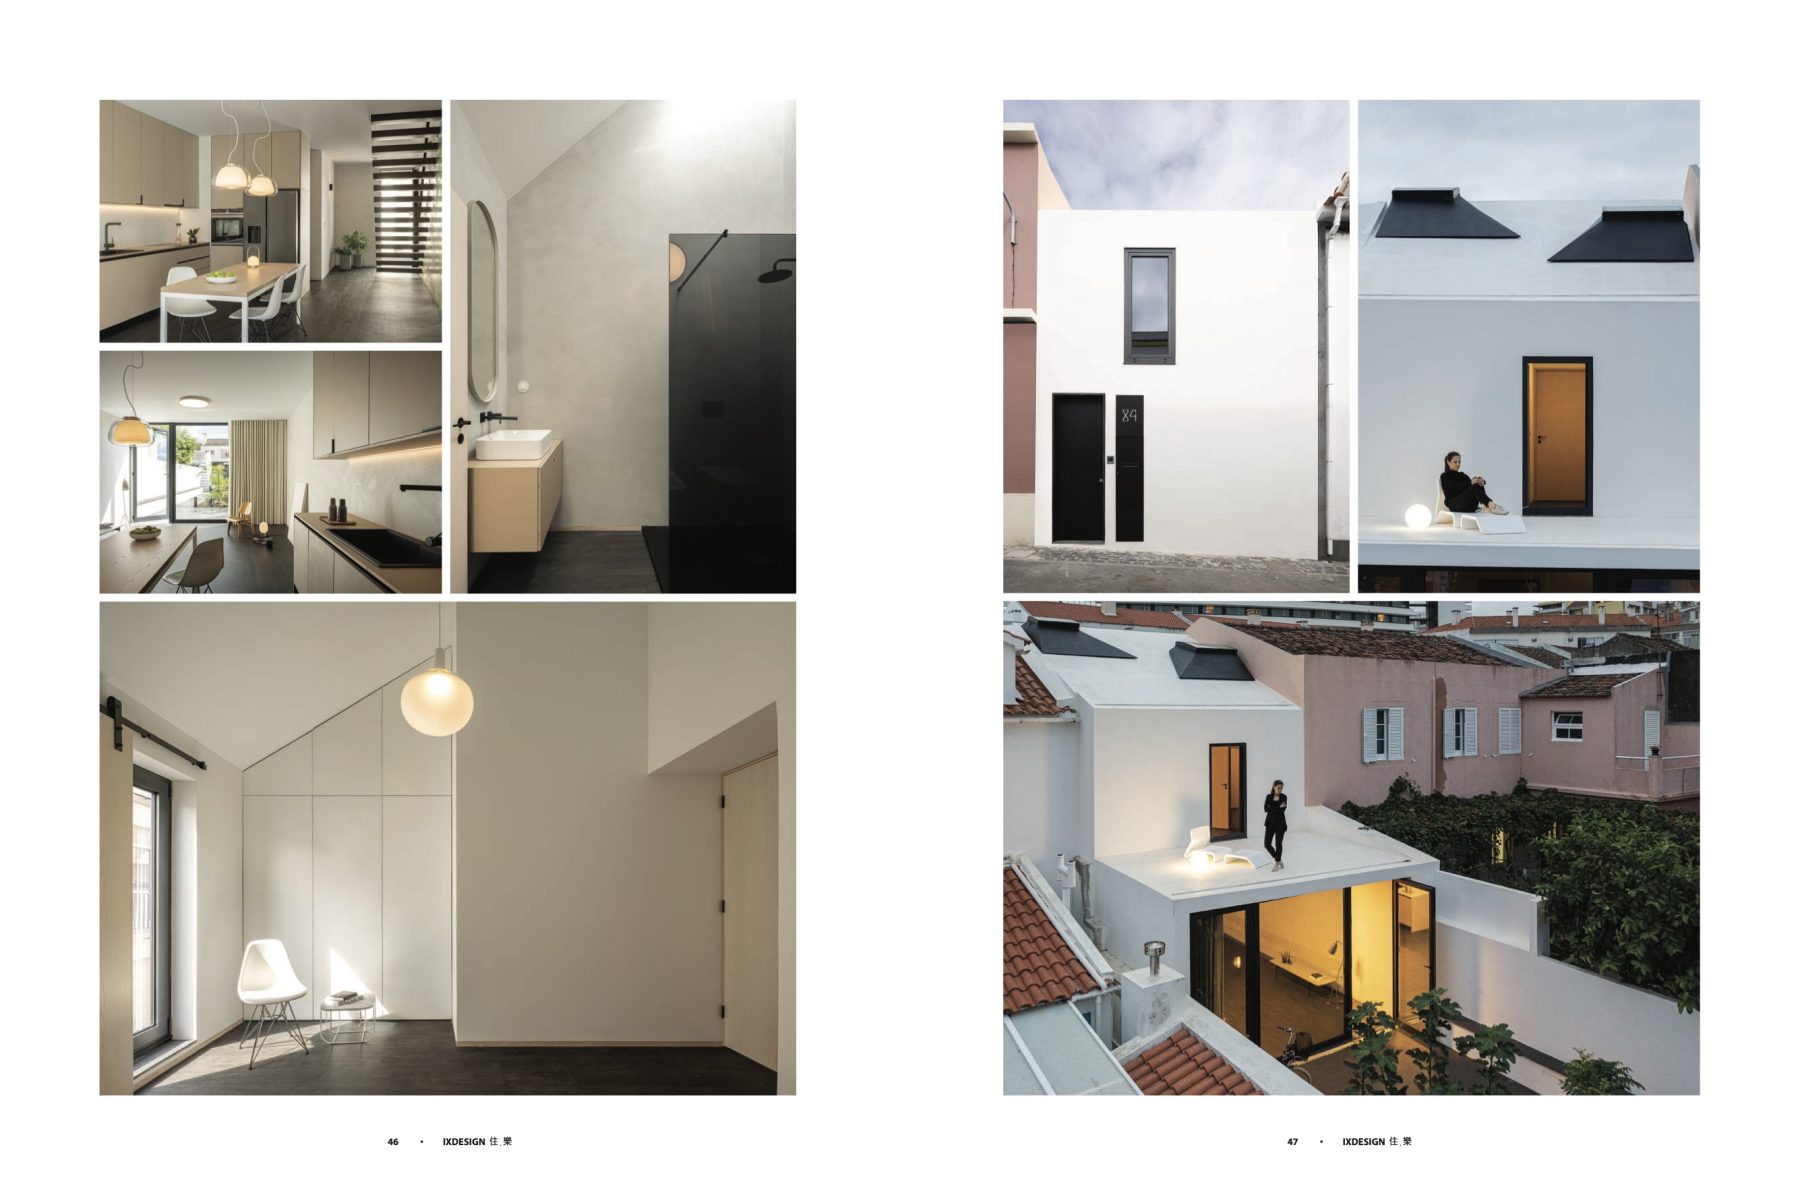 IXD Magazine Jan do atelier BOX arquitectos com fotografia arquitetura de ivo tavares studio - architectural photography